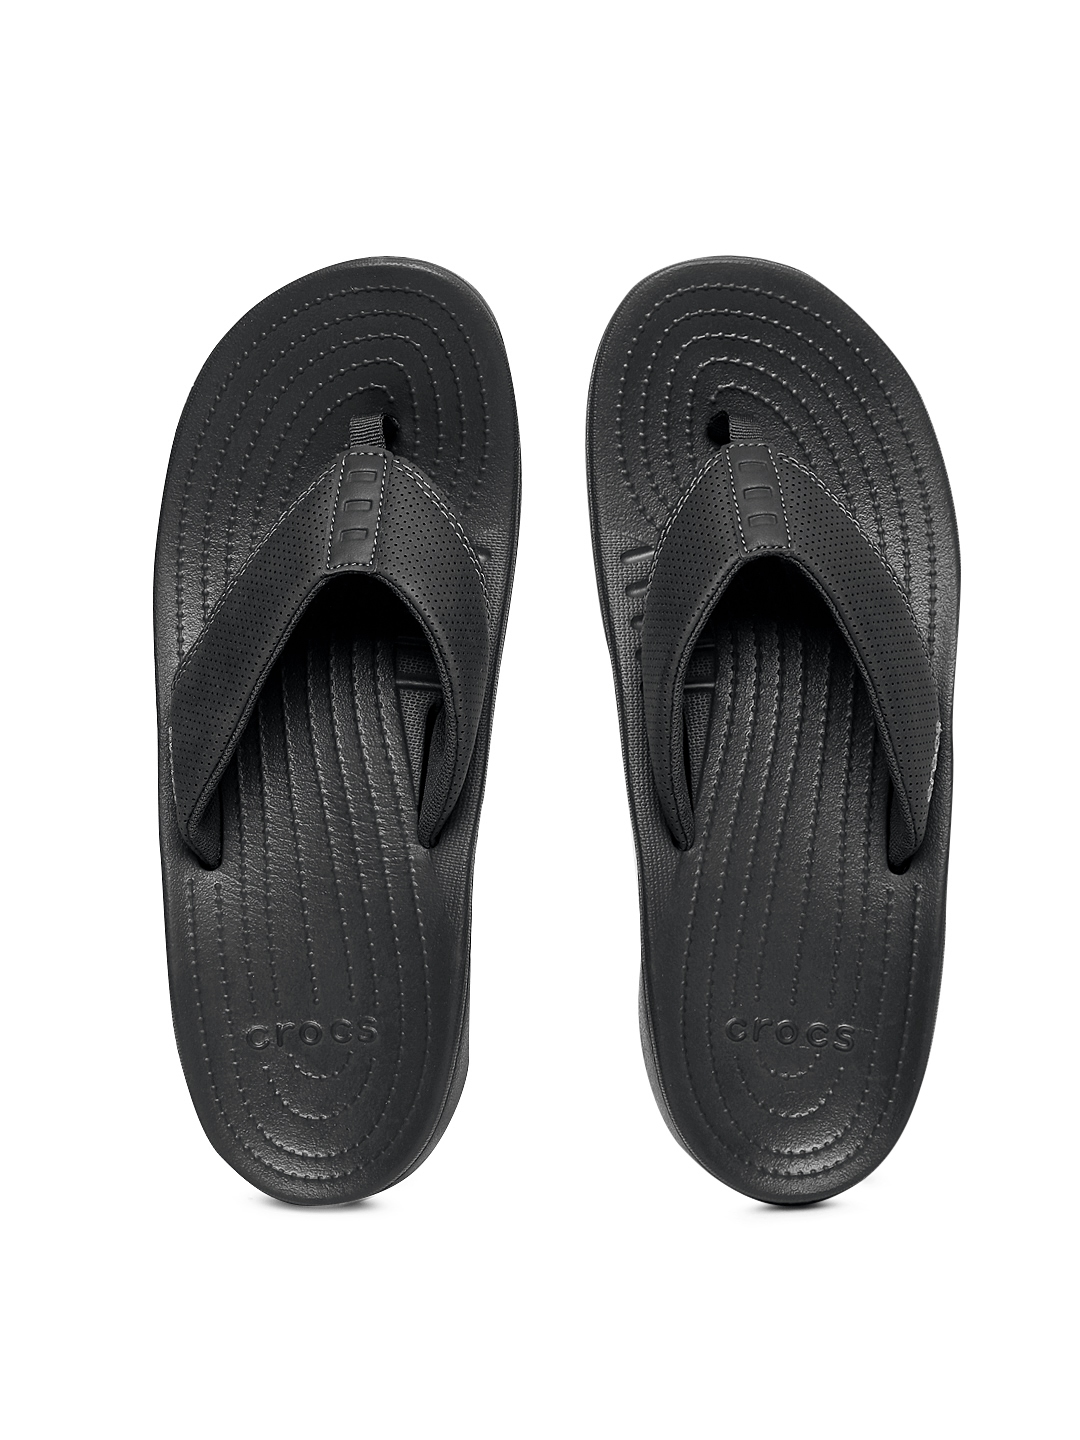 crocs black flip flops